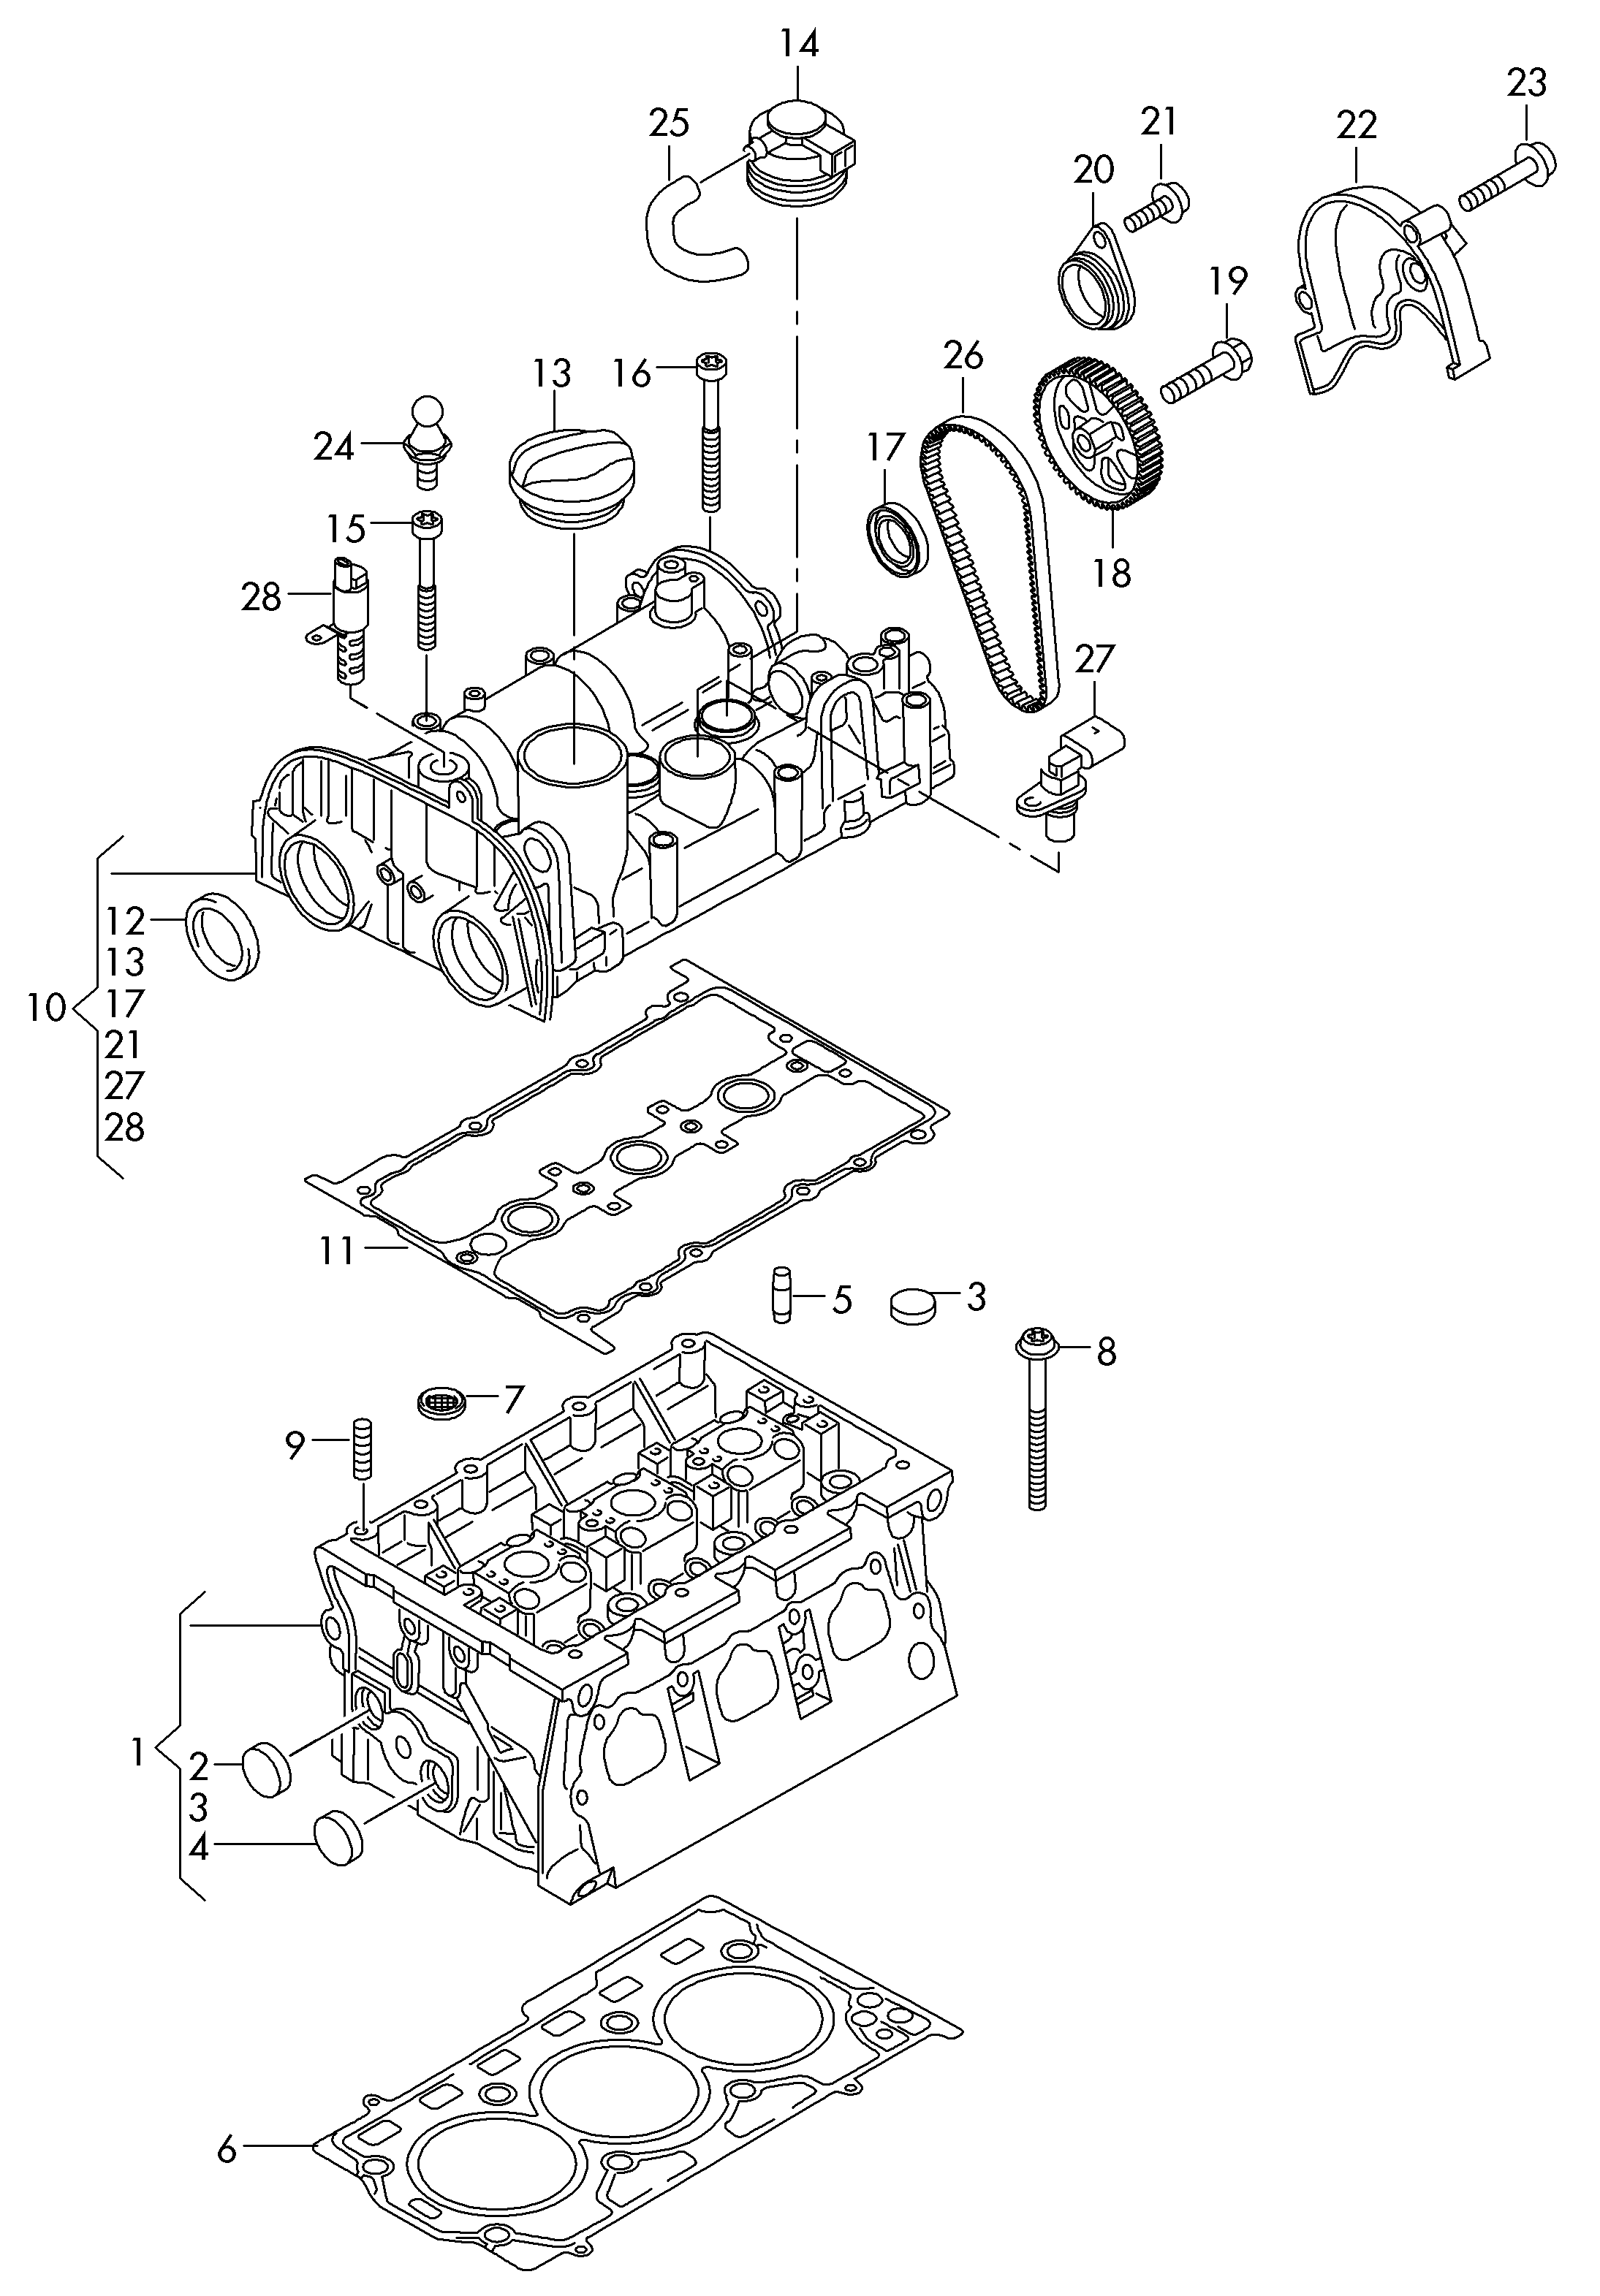 cilinderkop; kleppendeksel met
nokkenas - Citigo(CIT)  